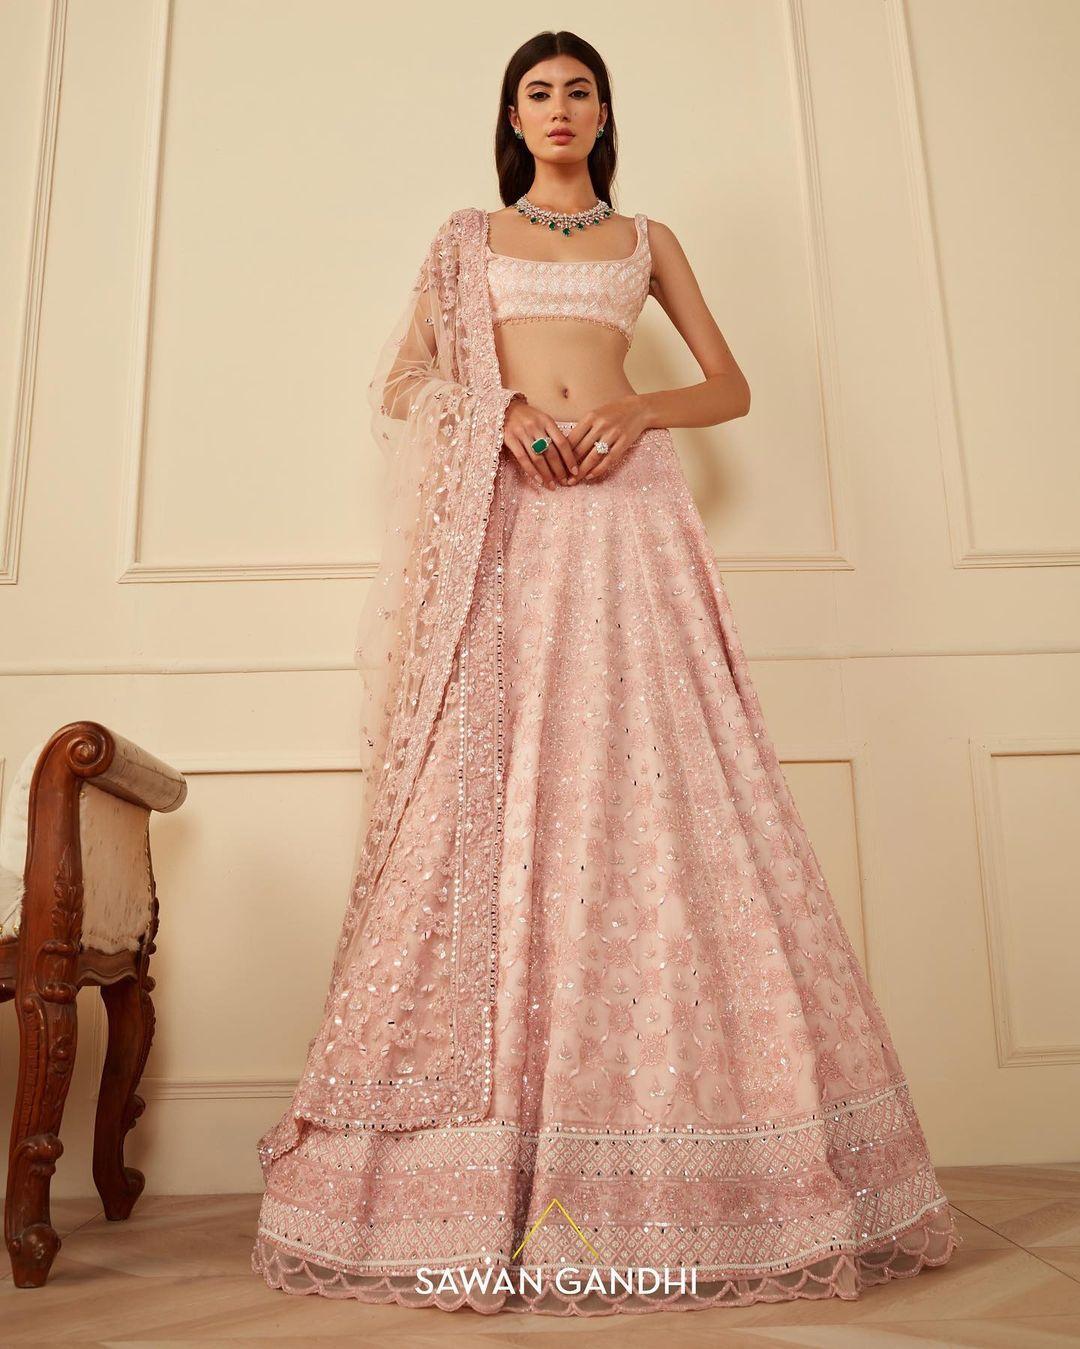 Photo of Two toned bridal jewellery with blush pink lehenga | Indian bridal  dress, Bridal fashion jewelry, Bridal jewellery inspiration